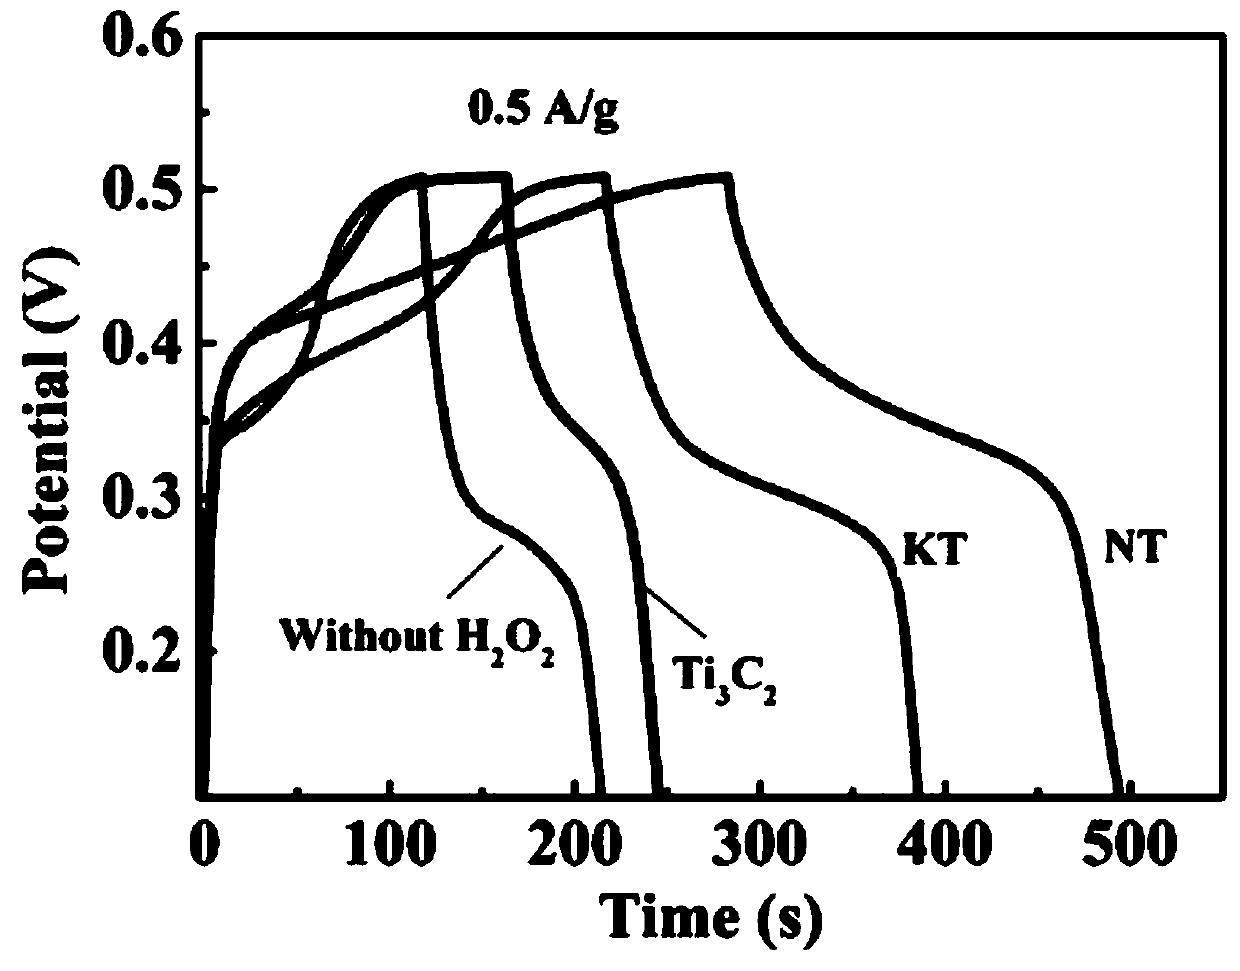 Preparation method and applications of hairy ball type Ti3C2(MXene)nanometer material